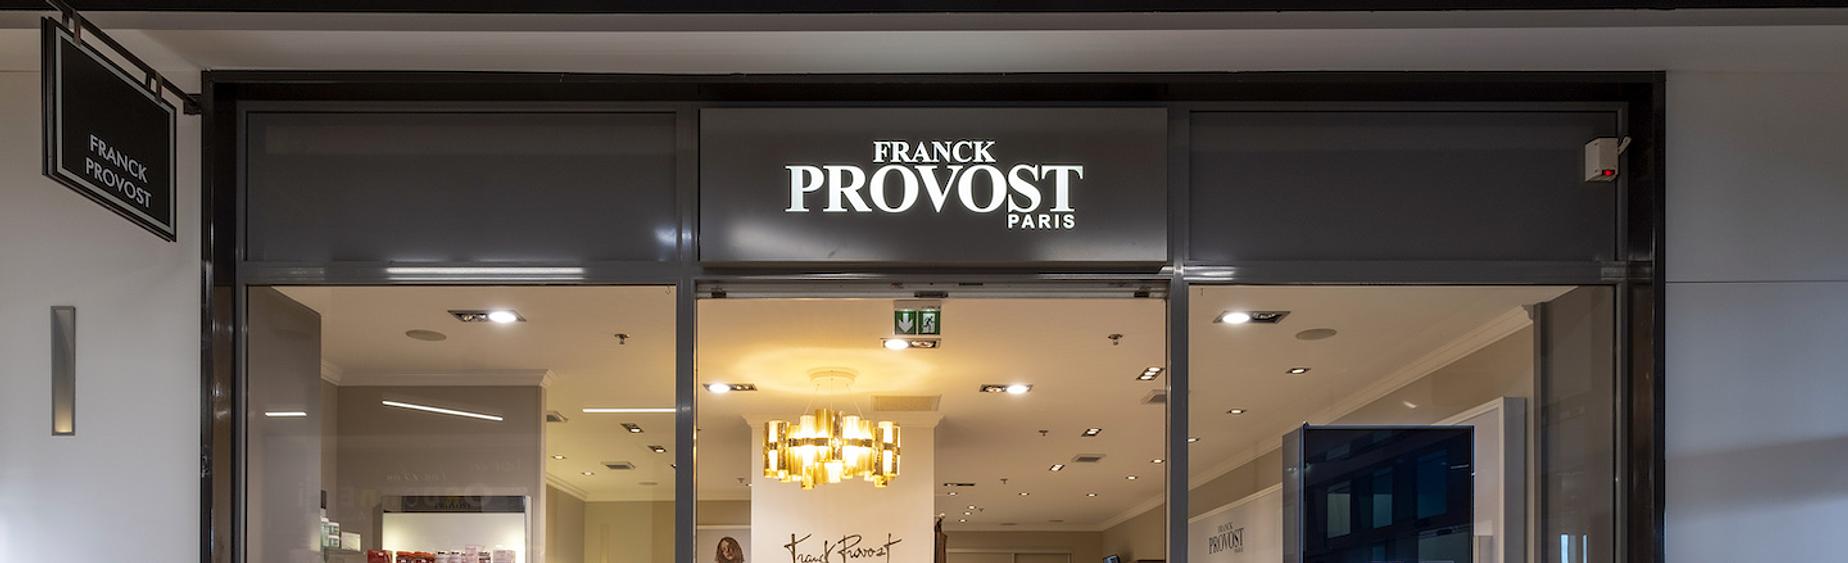 Franck Provost, Coiffeur, Promenade Oceane, Chateau d'Olonne, centre commercial, brushing